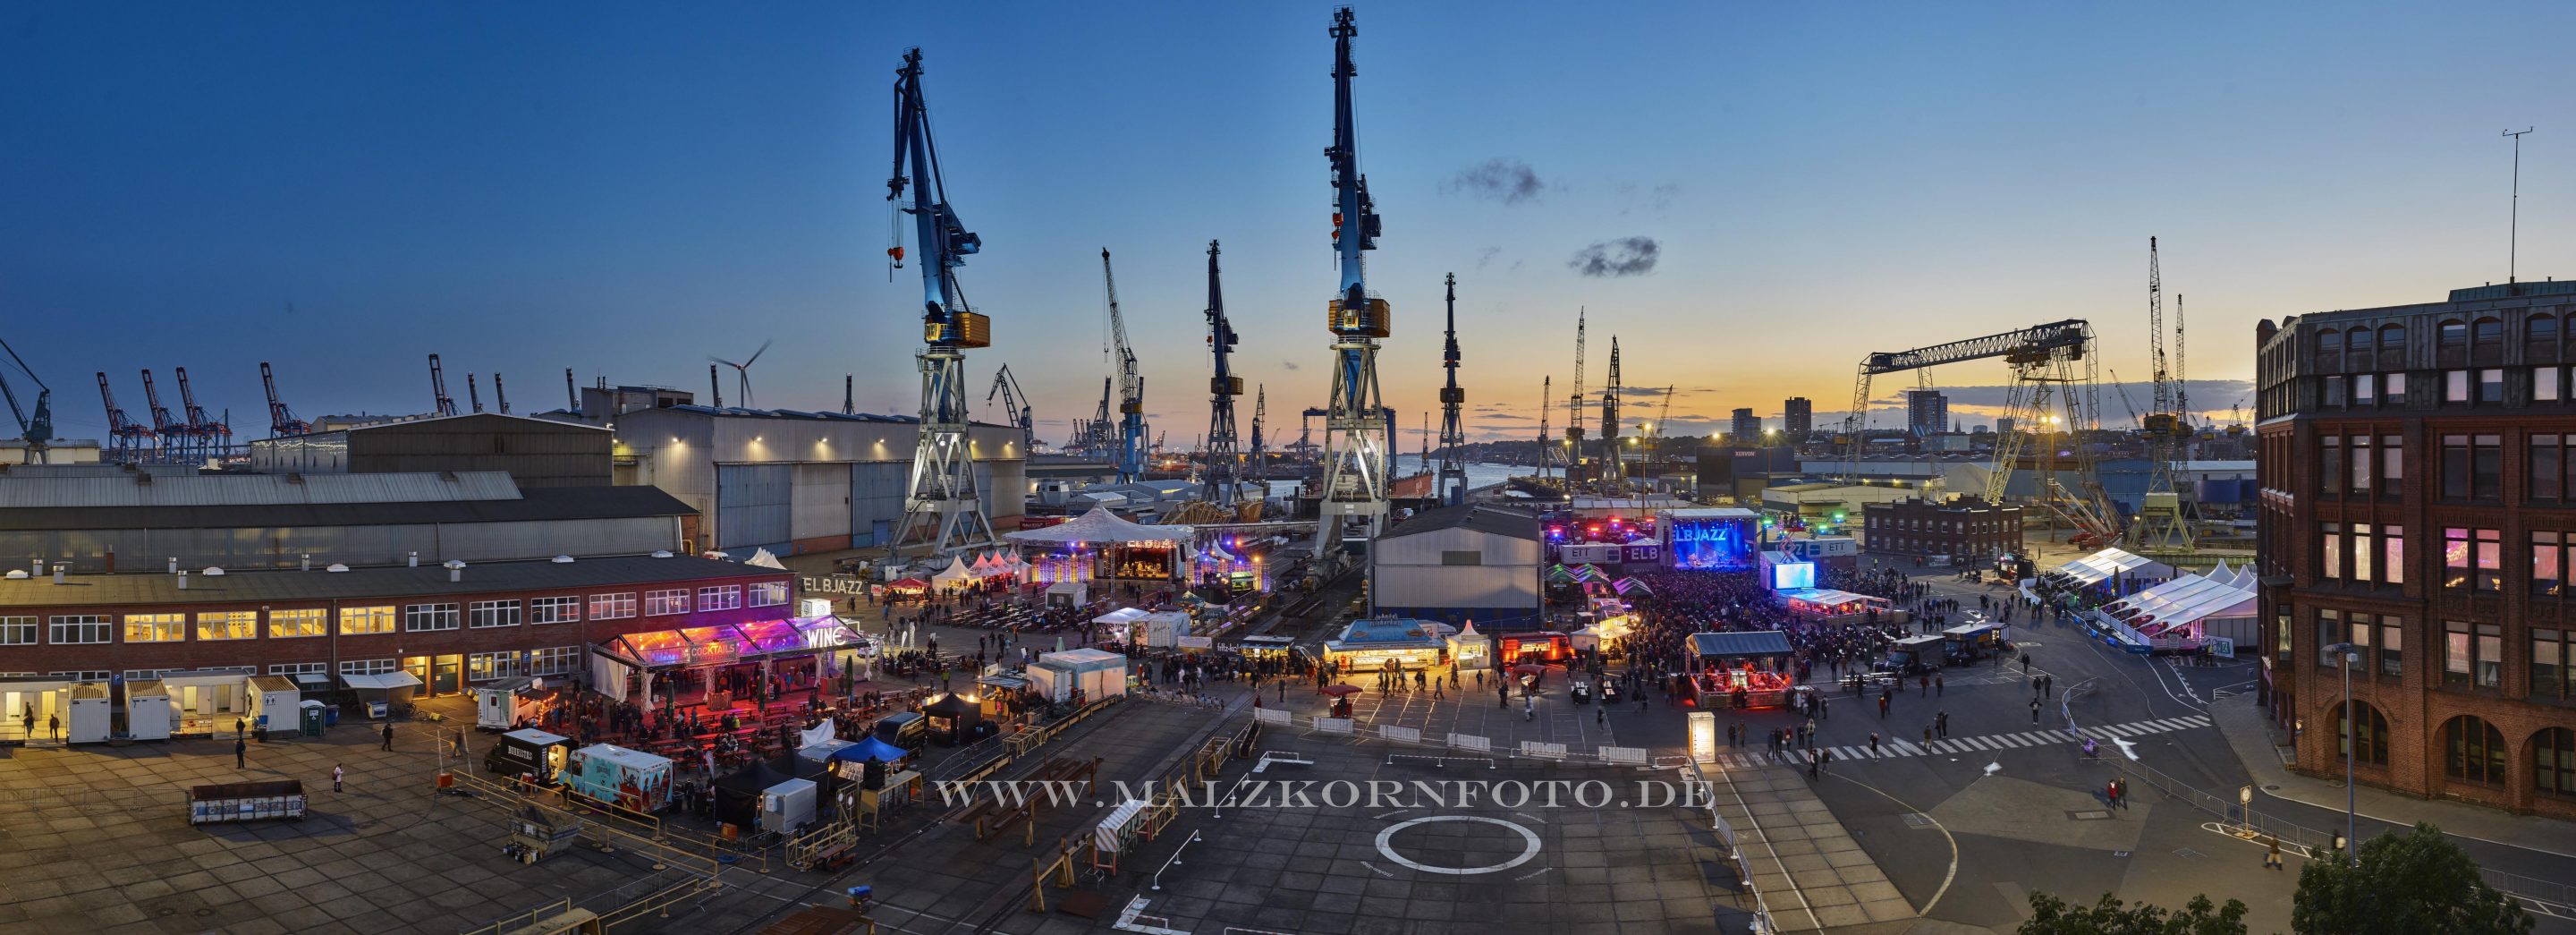 Elbjazz Festival Blohm+Voss Shipyards